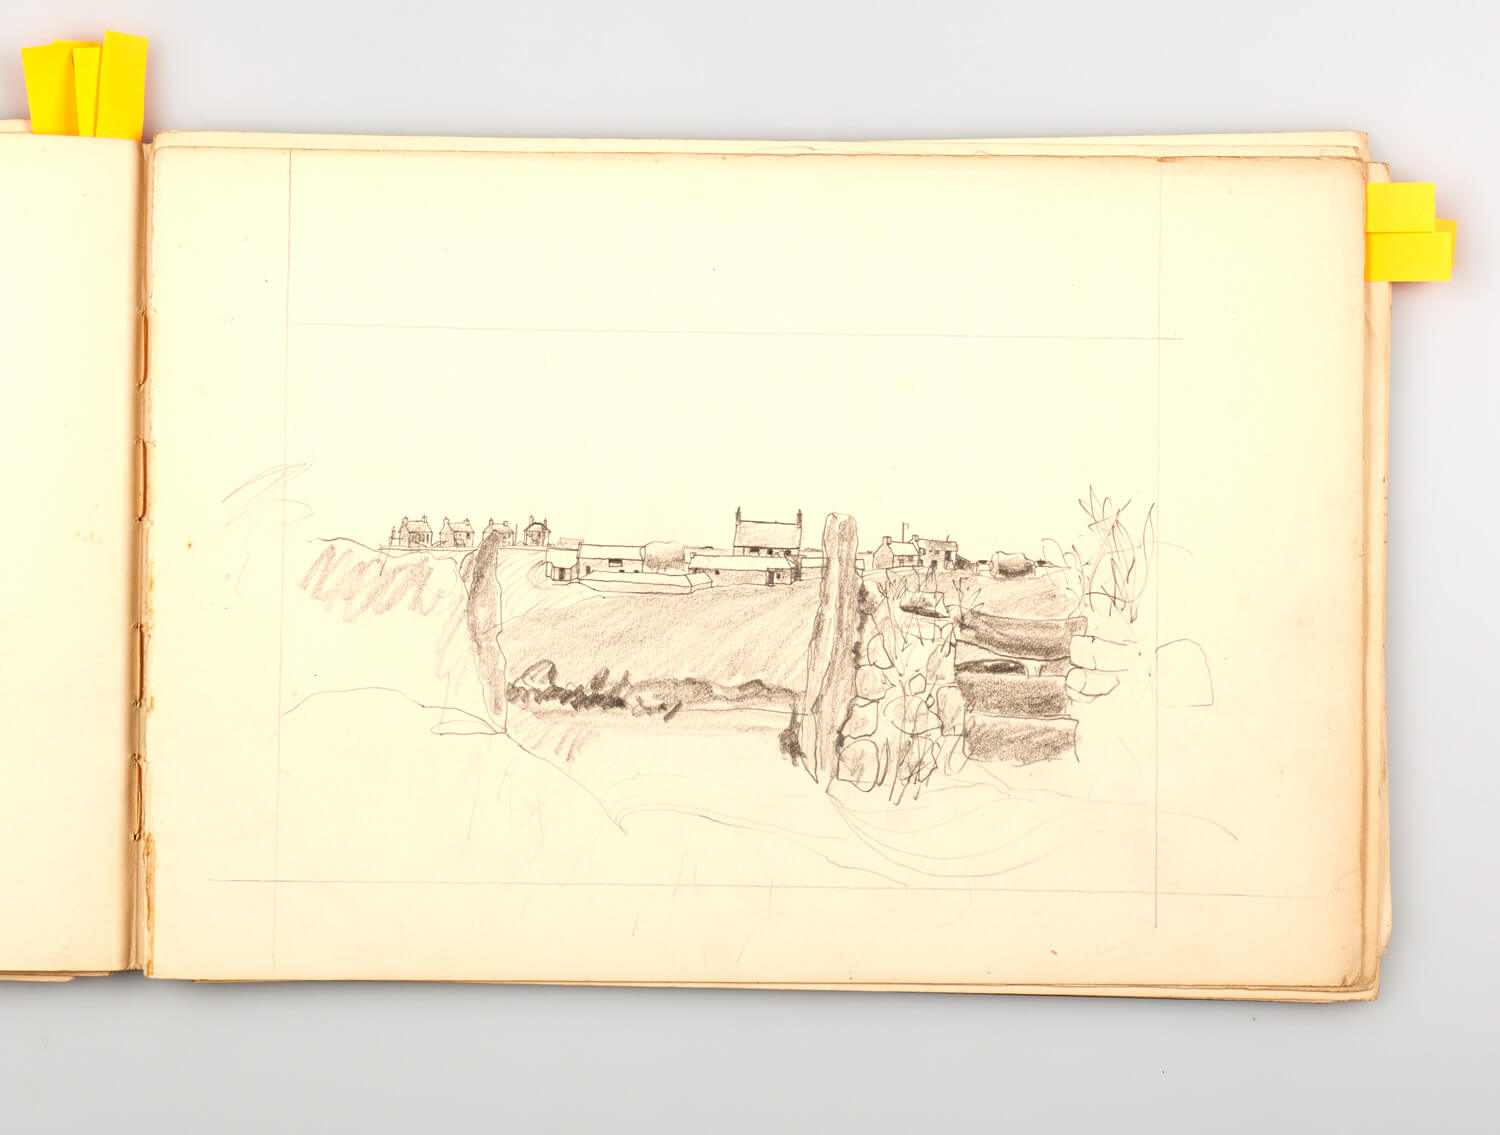 JB279 - Cornish Sketch Book 1948 - 1948 - 25 x 36.5 cm - Pencil